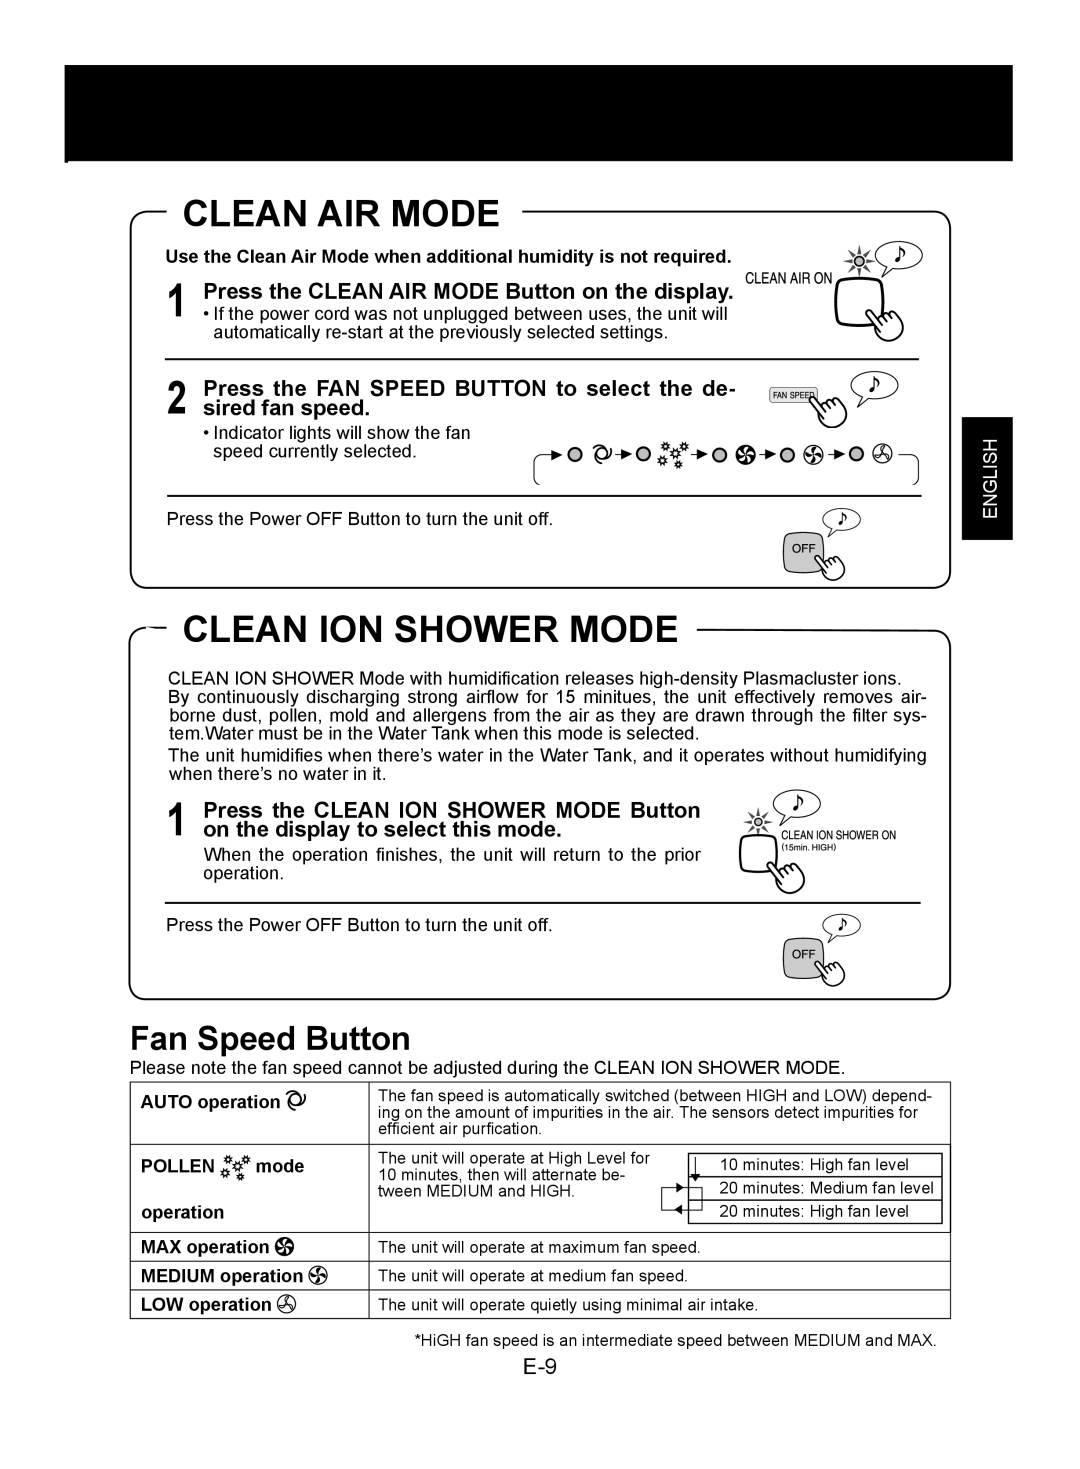 Sharp KC-850EK Clean Air Mode, Clean Ion Shower Mode, Fan Speed Button, Press the CLEAN AIR MODE Button on the display 